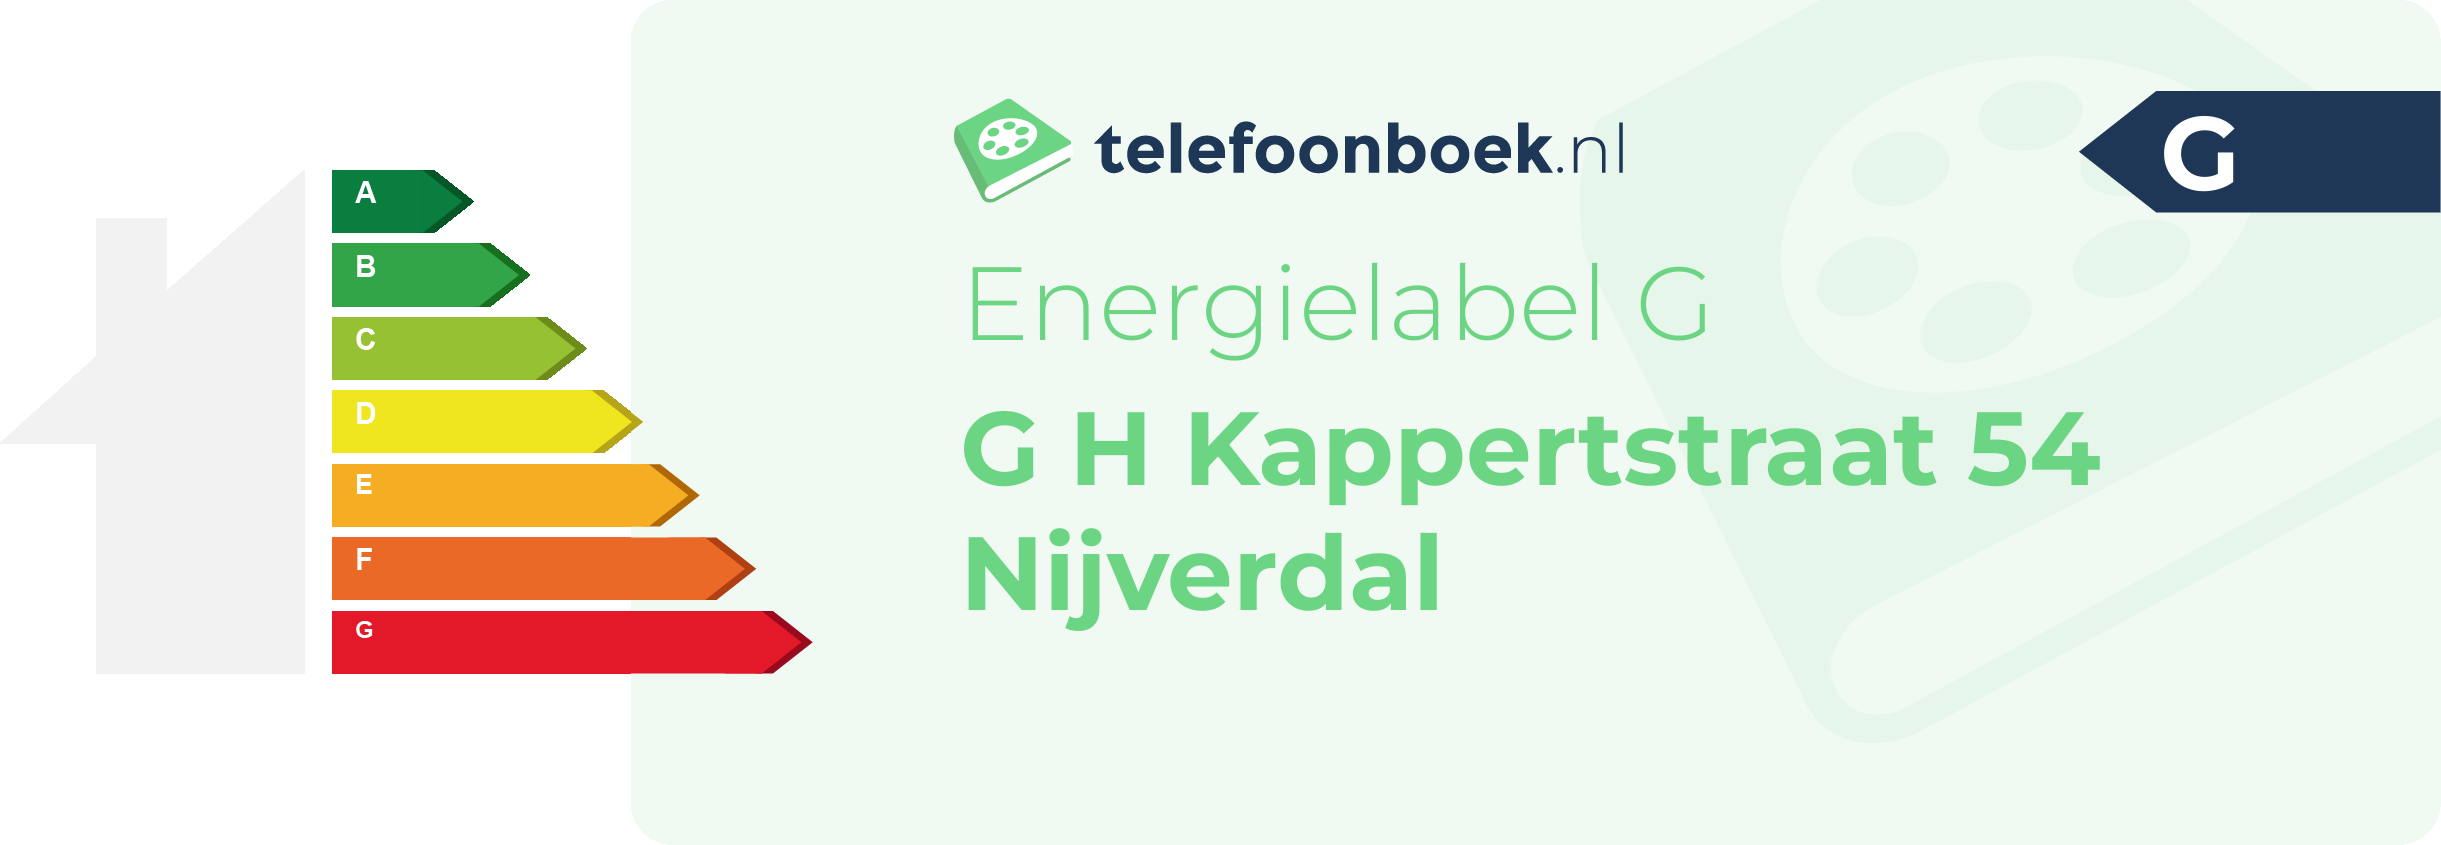 Energielabel G H Kappertstraat 54 Nijverdal